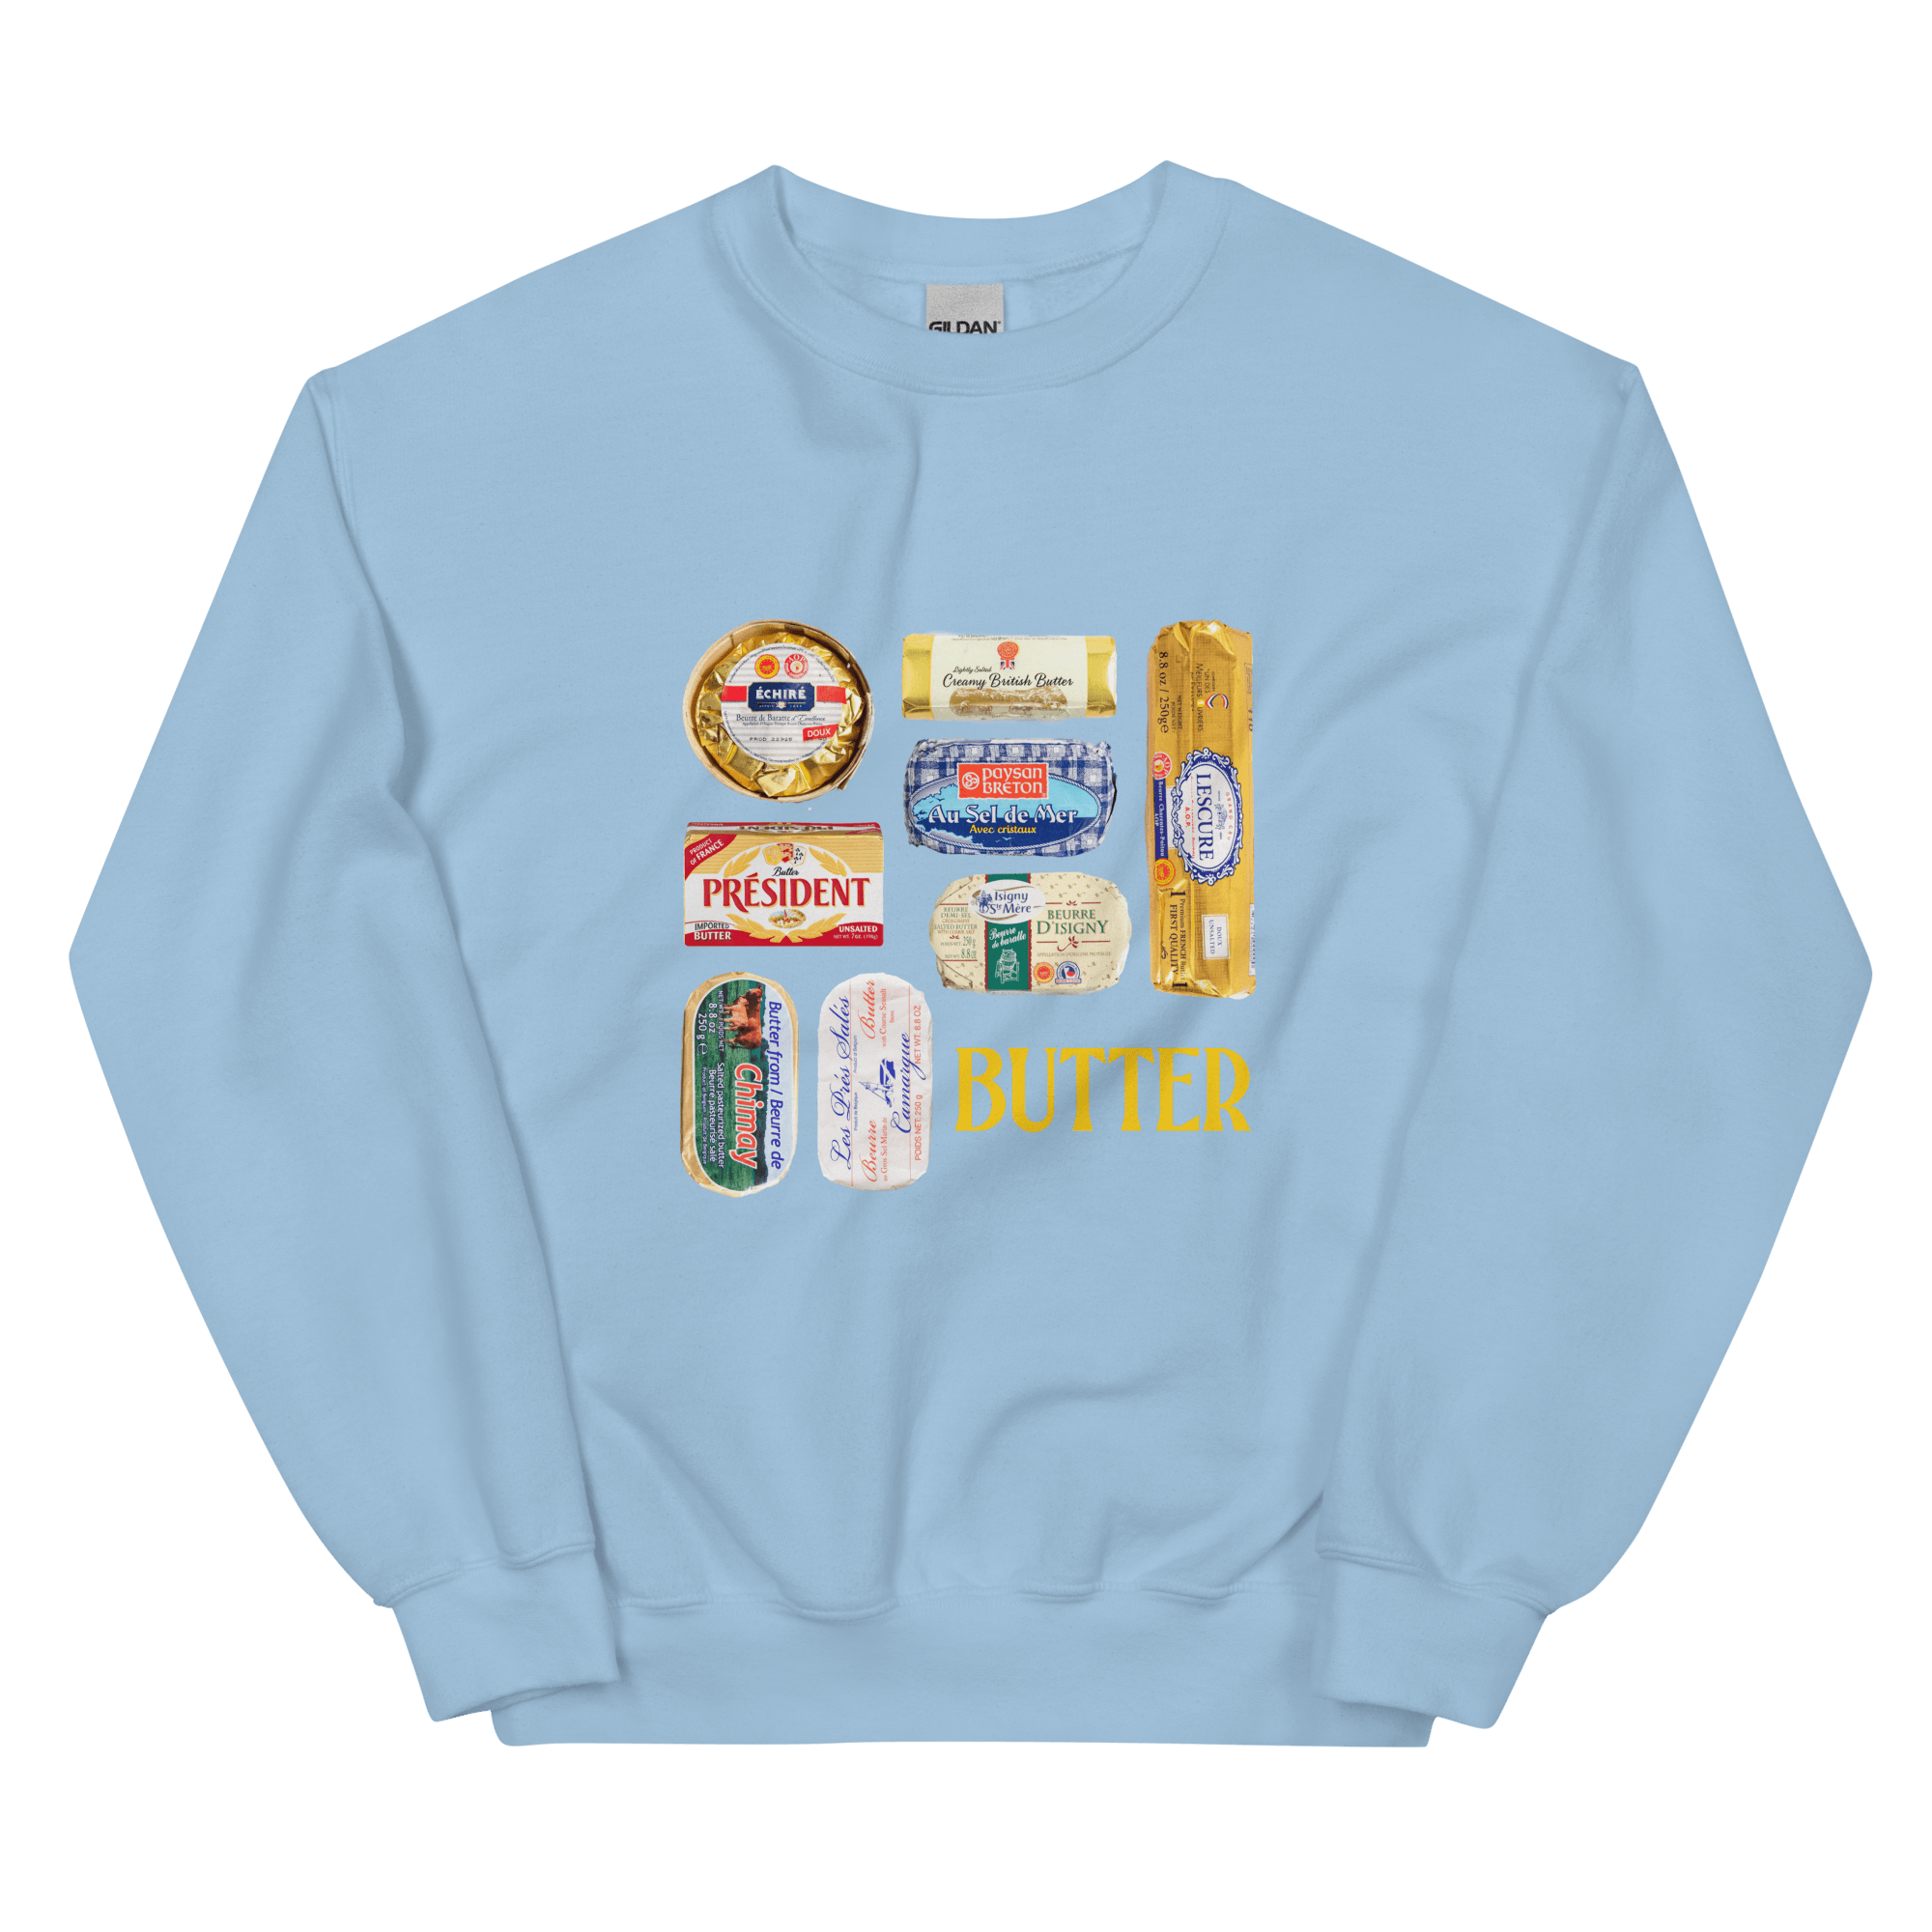 Butter of Europe Sweatshirt - Polychrome Goods 🍊